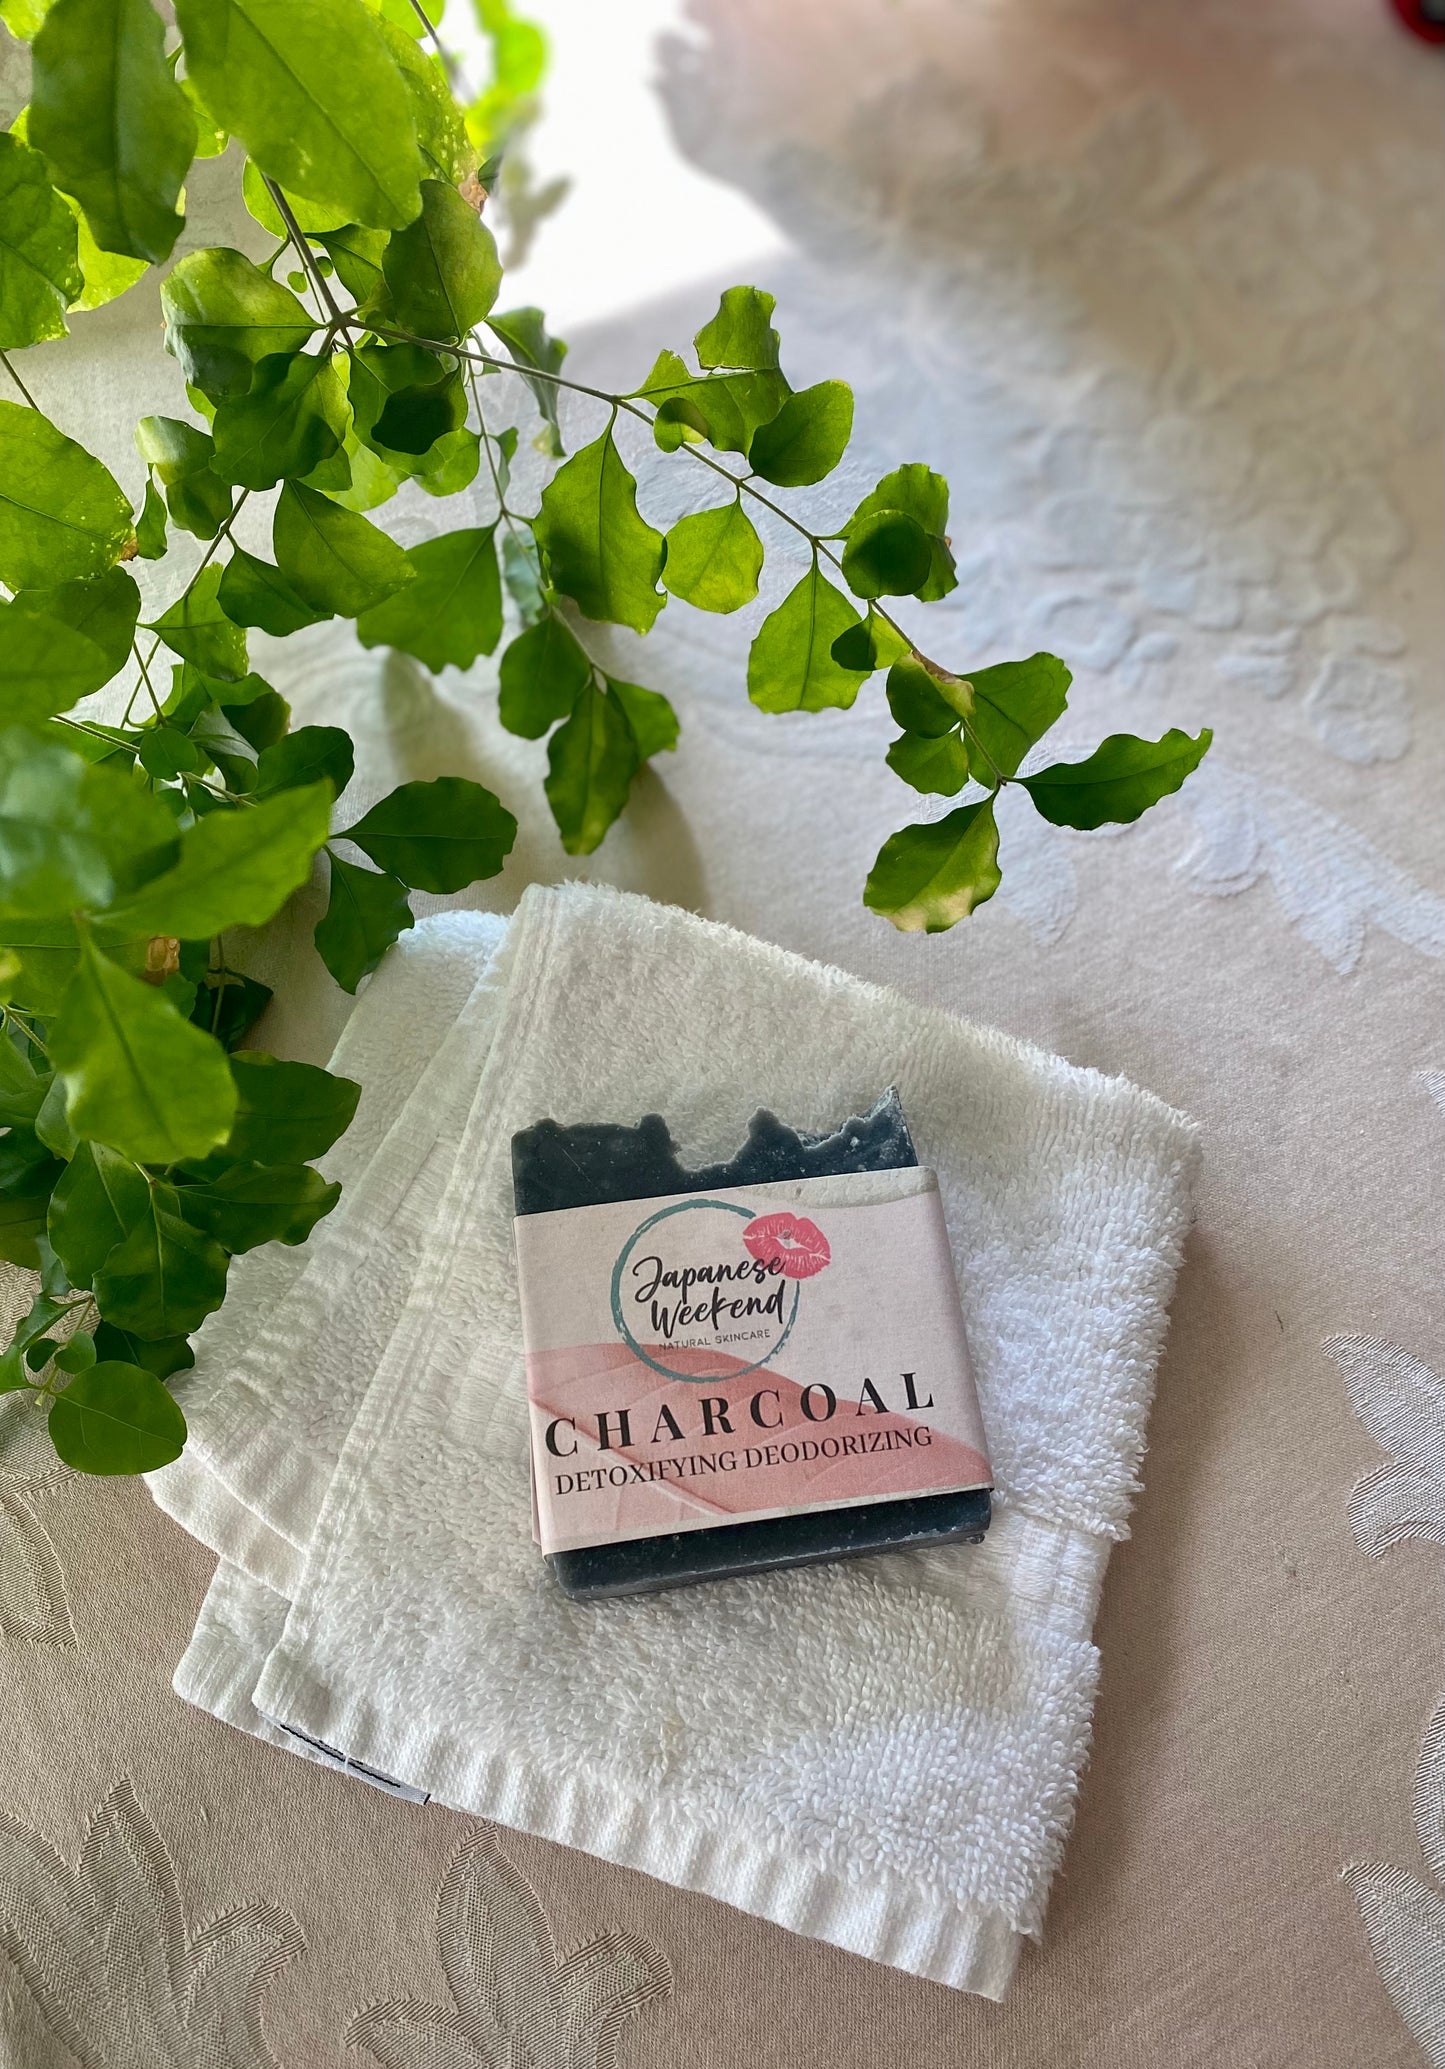 Japanese Weekend Charcoal Soap (Detoxifying Deodorizing) Bar All Natural Vegan Eco-friendly Pure Small Business Artisan Handmade